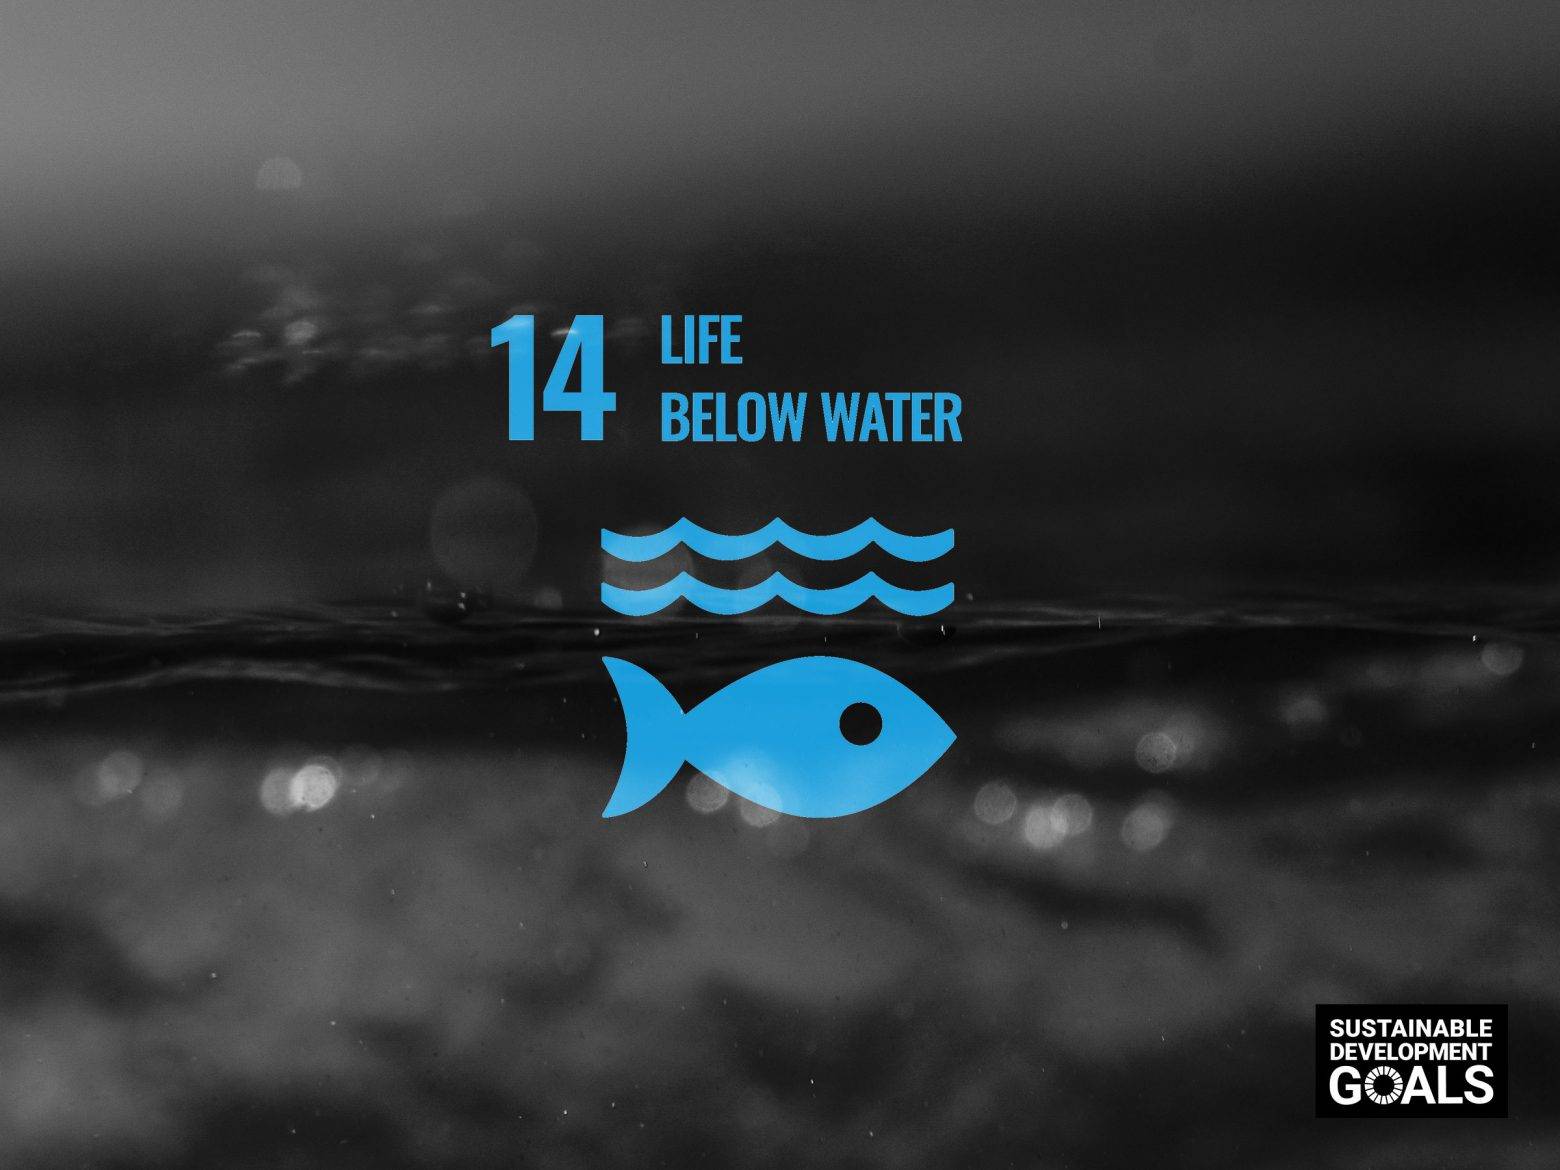 https://dev.soulandsurf.com/wp-content/uploads/2021/08/our-sustainable-ish-plan-S_S-UNSDG-Life-Below-Water-e1628601861182.jpg Image